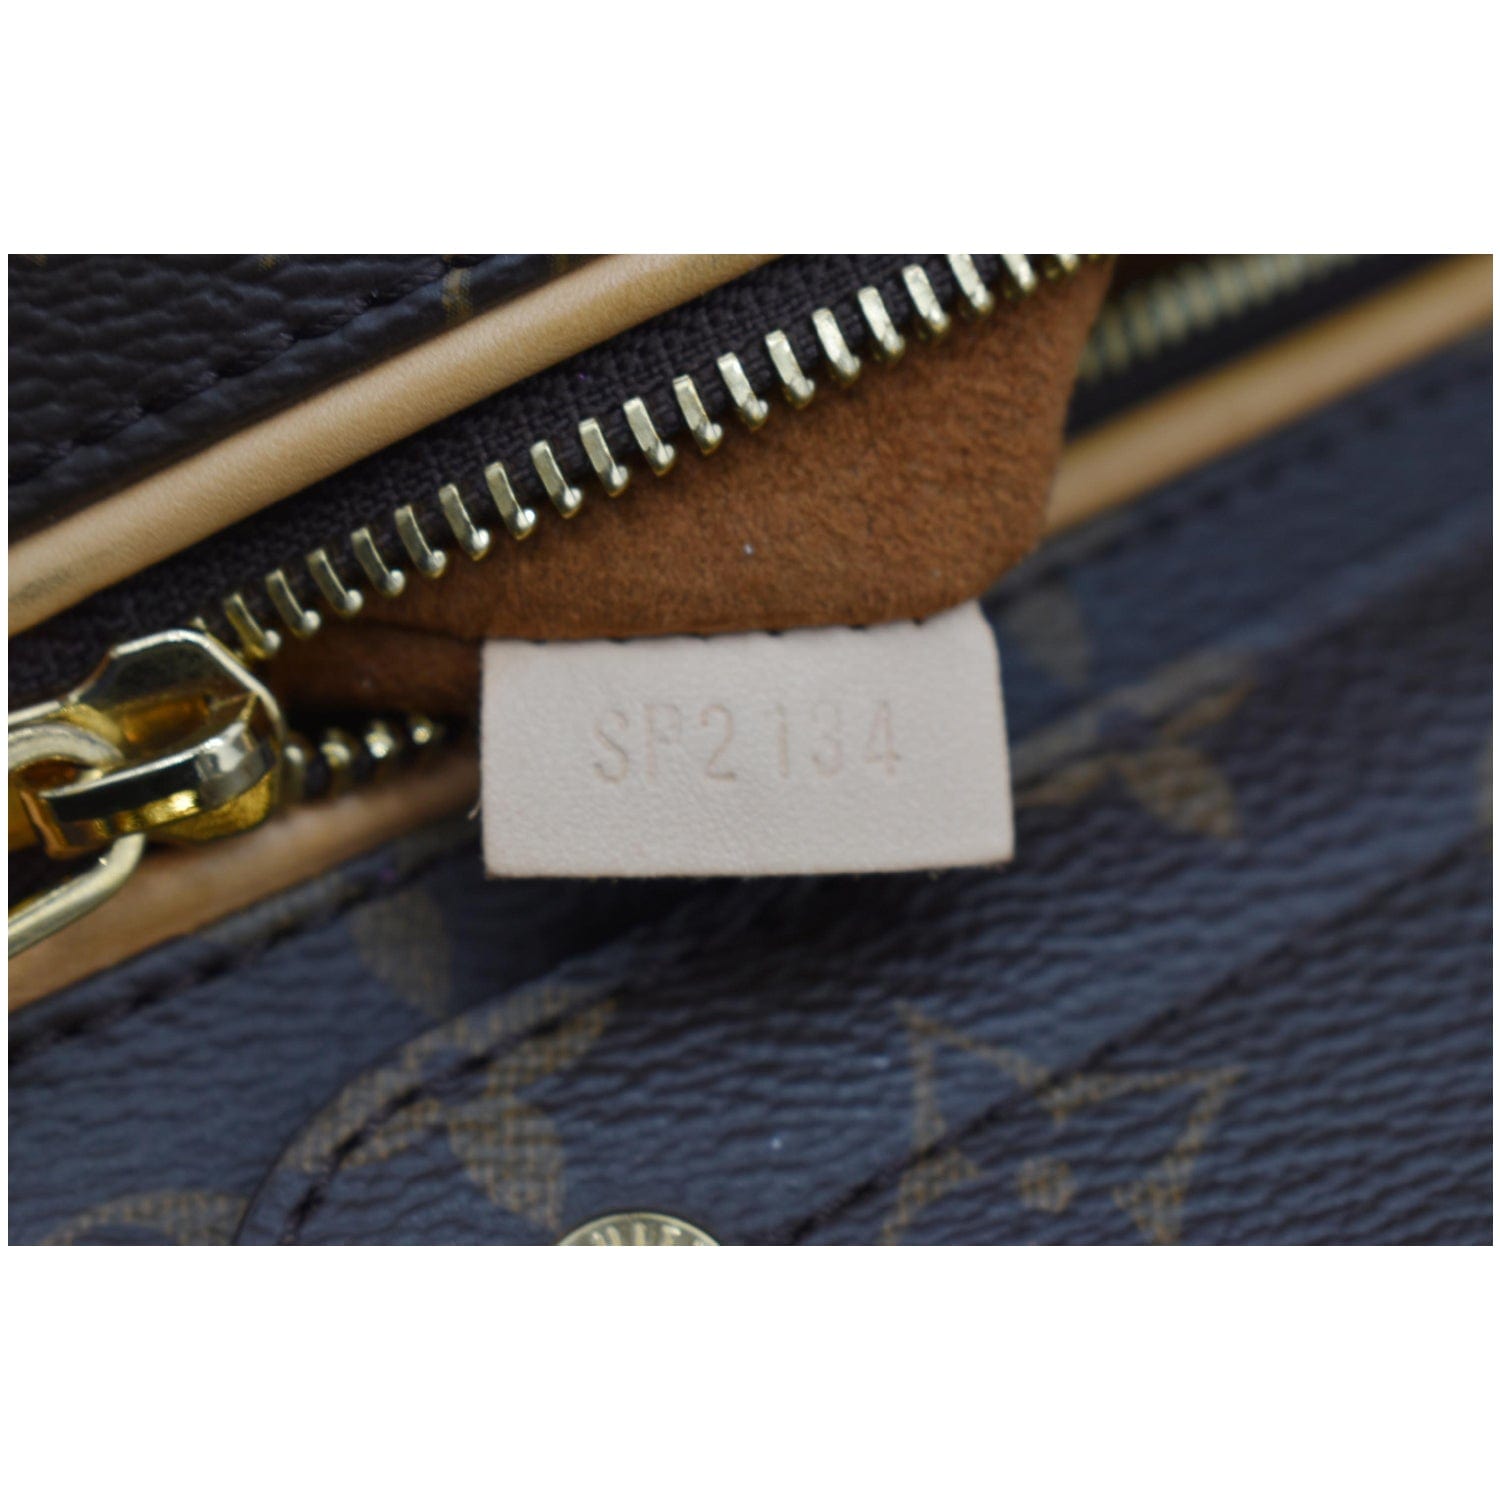 Louis Vuitton Olympe Camel Brown Monogram Canvas Shoulder Bag - MyDesignerly